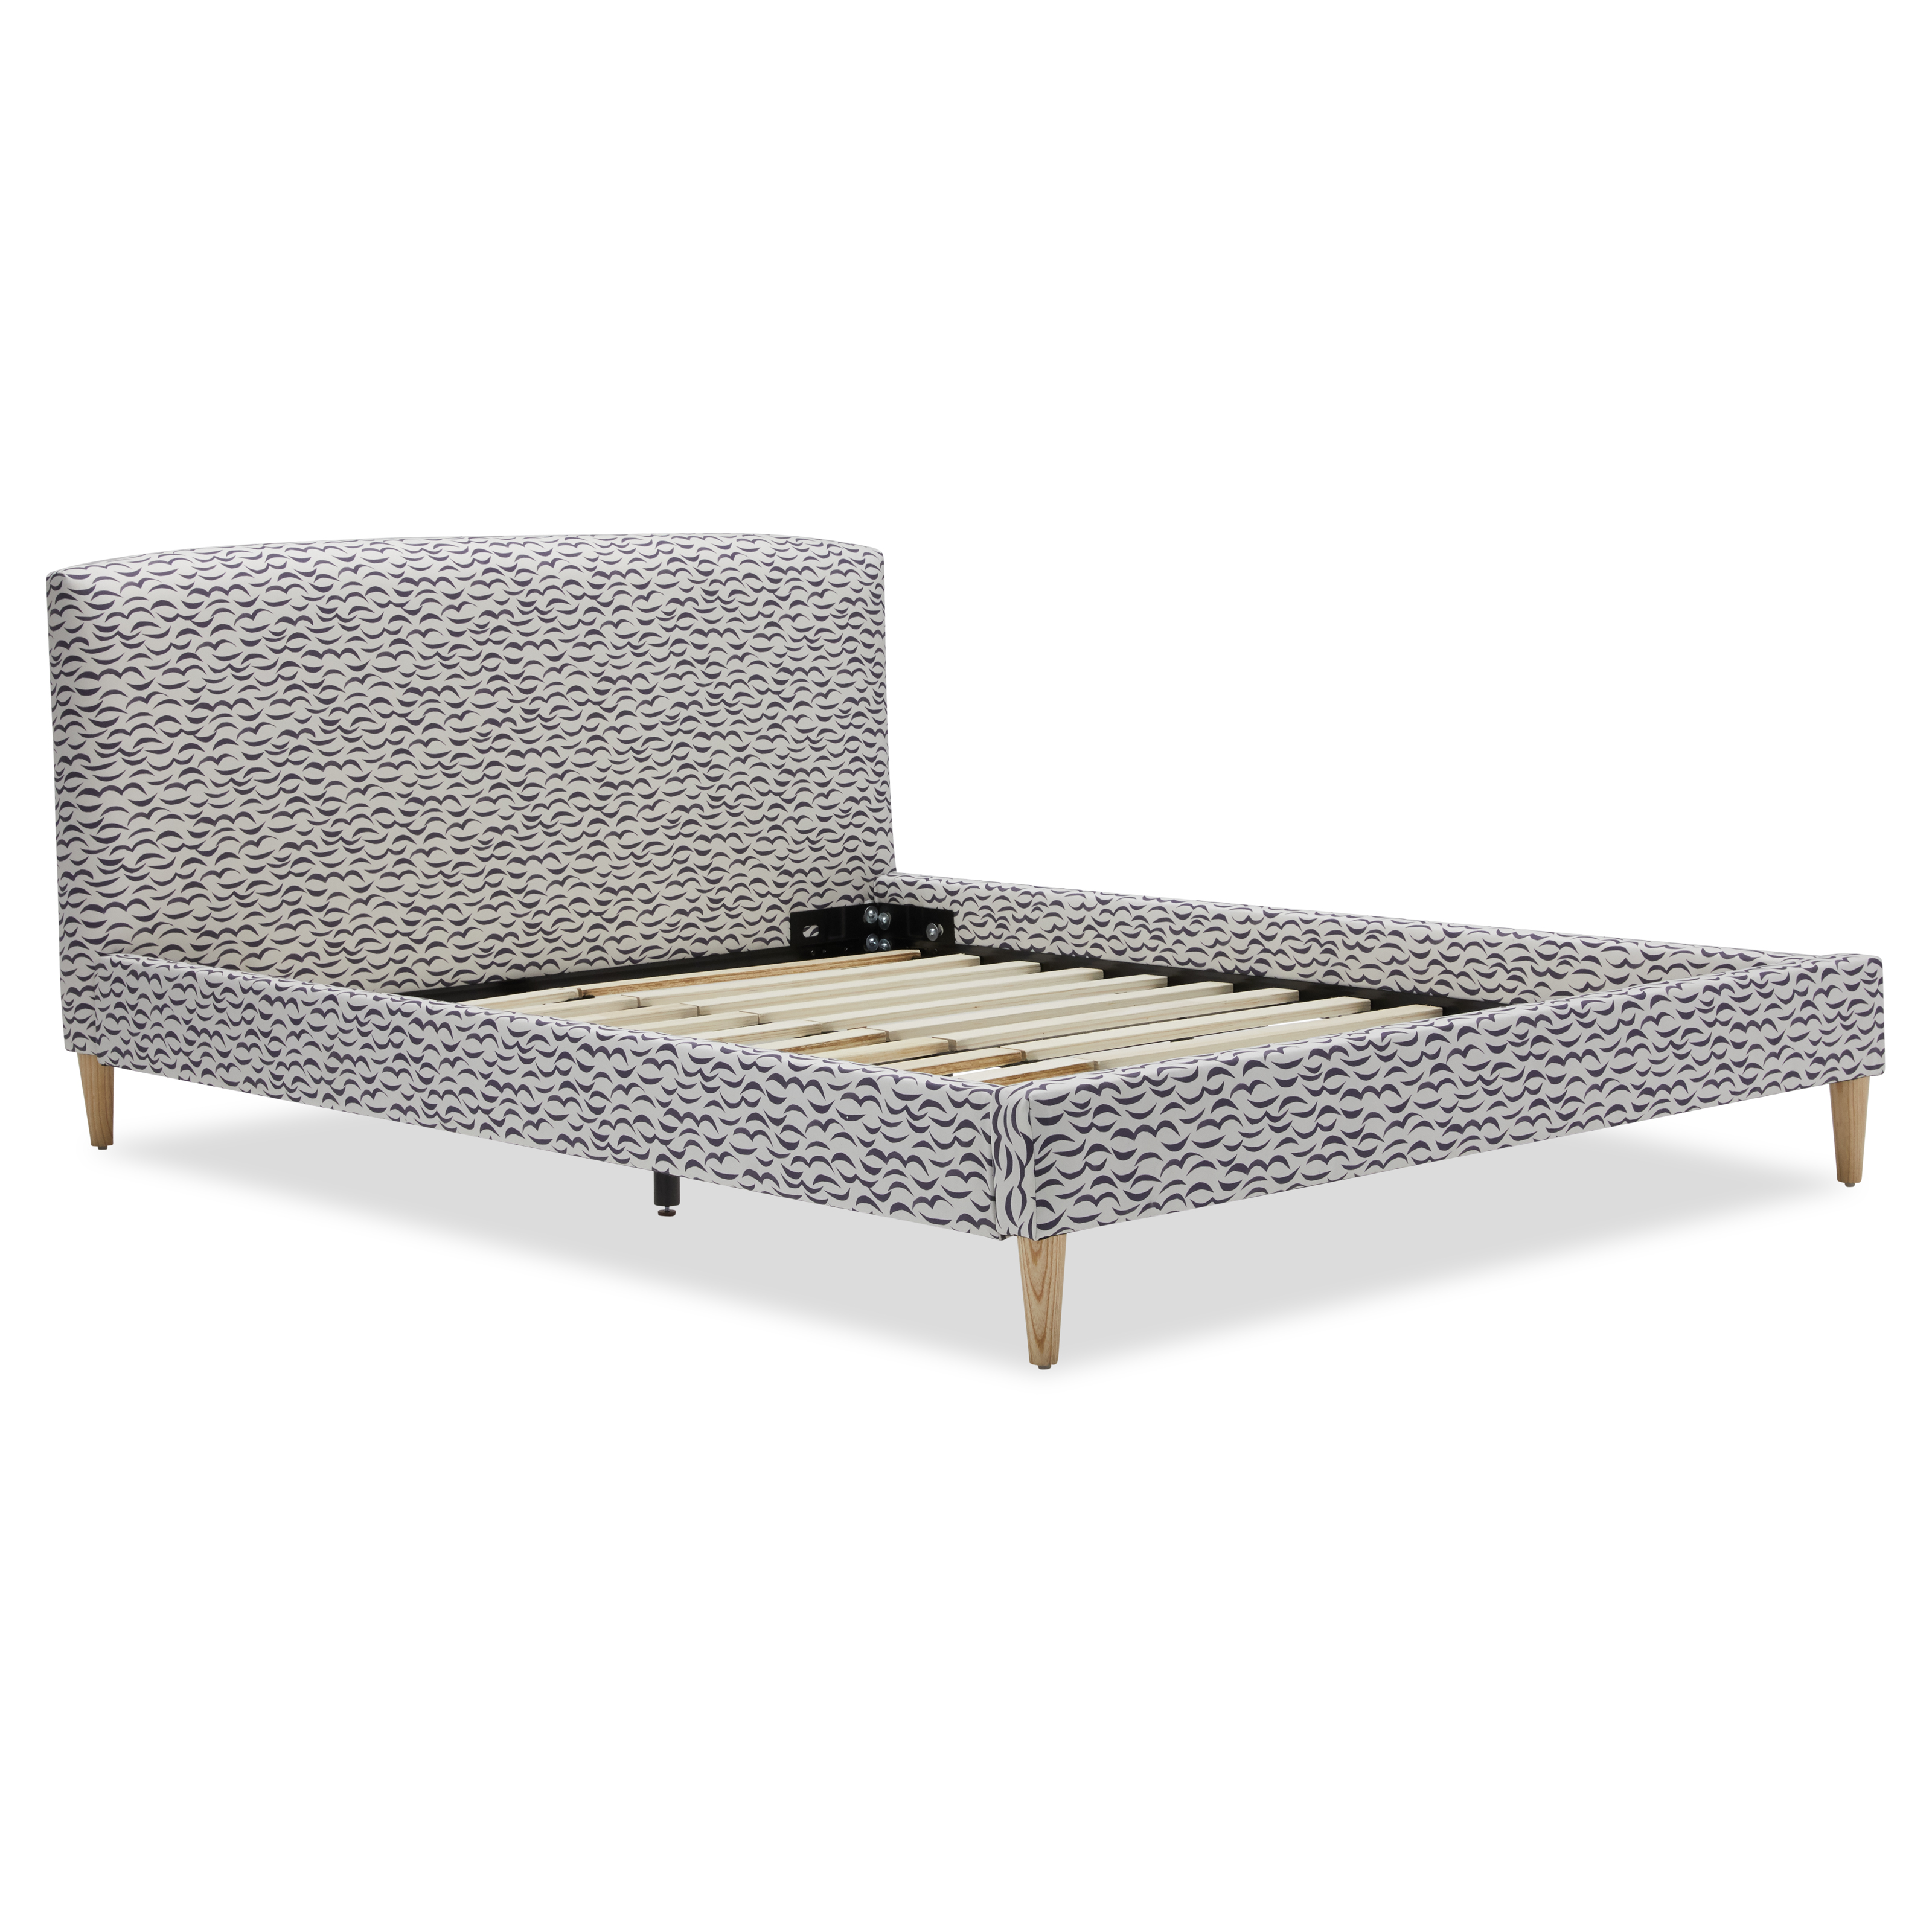 Crescent Moon Upholstered Platform Bed, Multiple Sizes by Drew Barrymore Flower Home - image 4 of 10